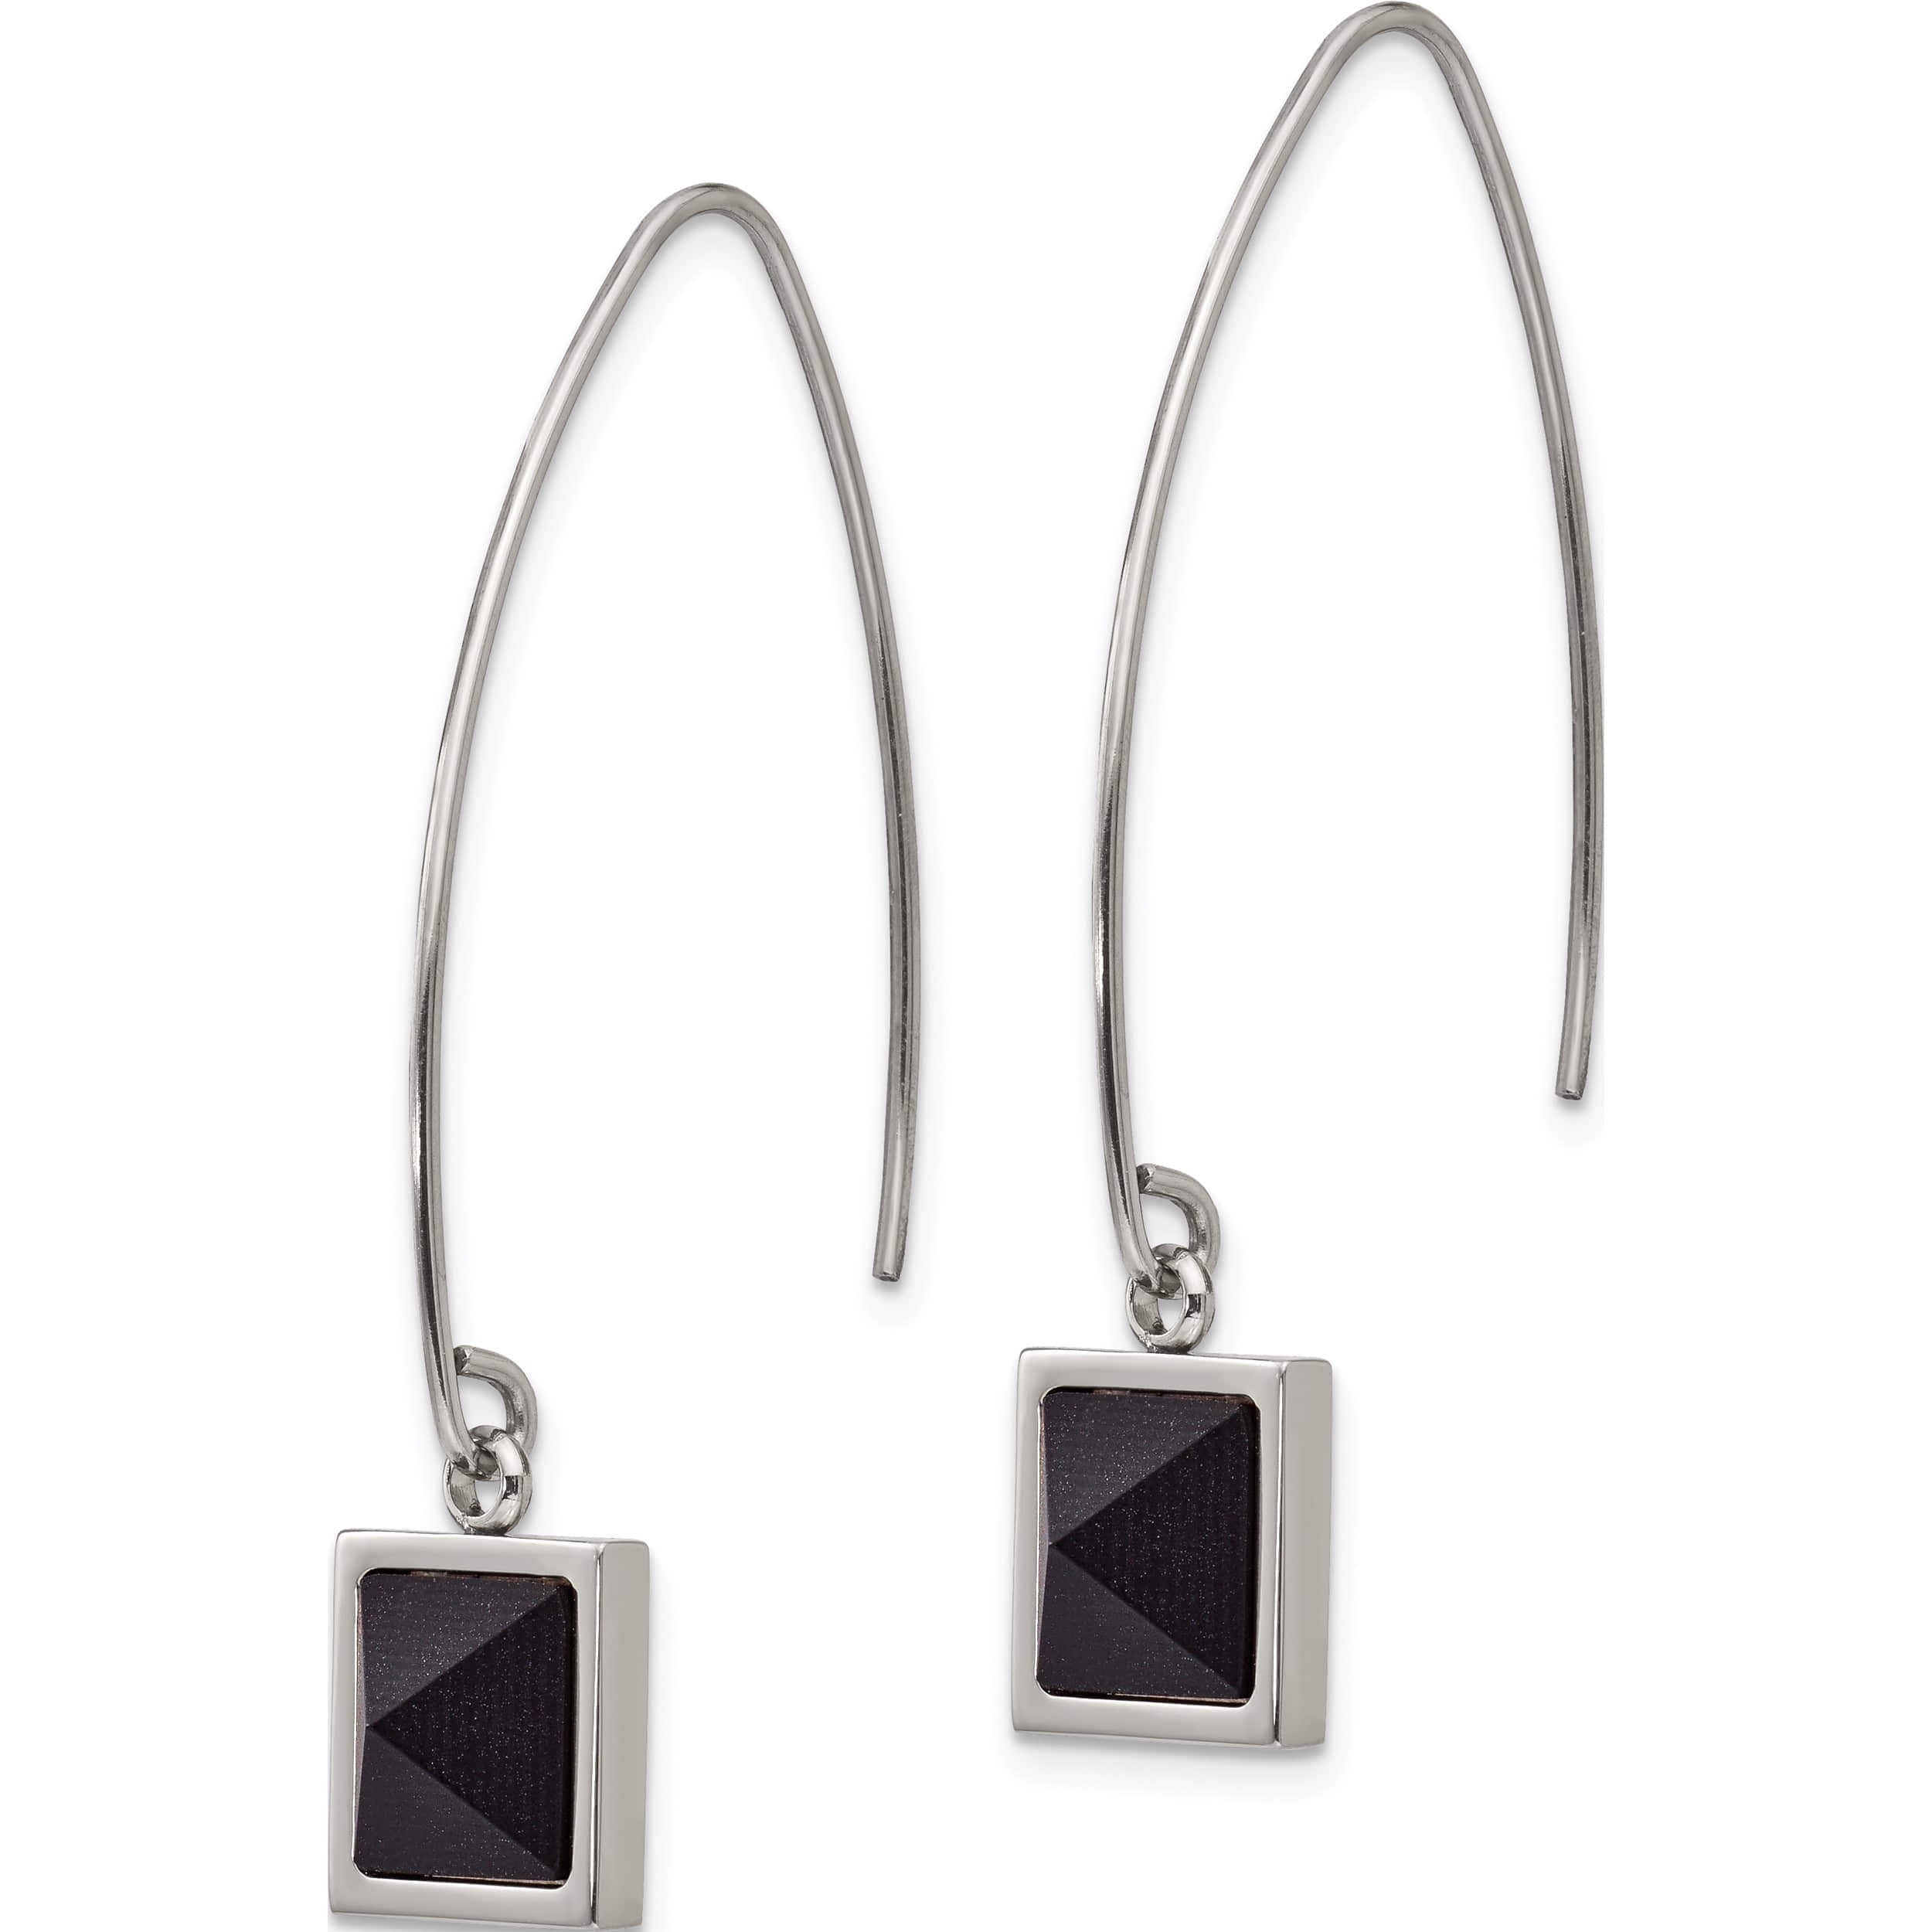 Cappuccino earrings metal enamel dangly shepherds hook , choose your color!  .5” wide custom jewelry car accessories